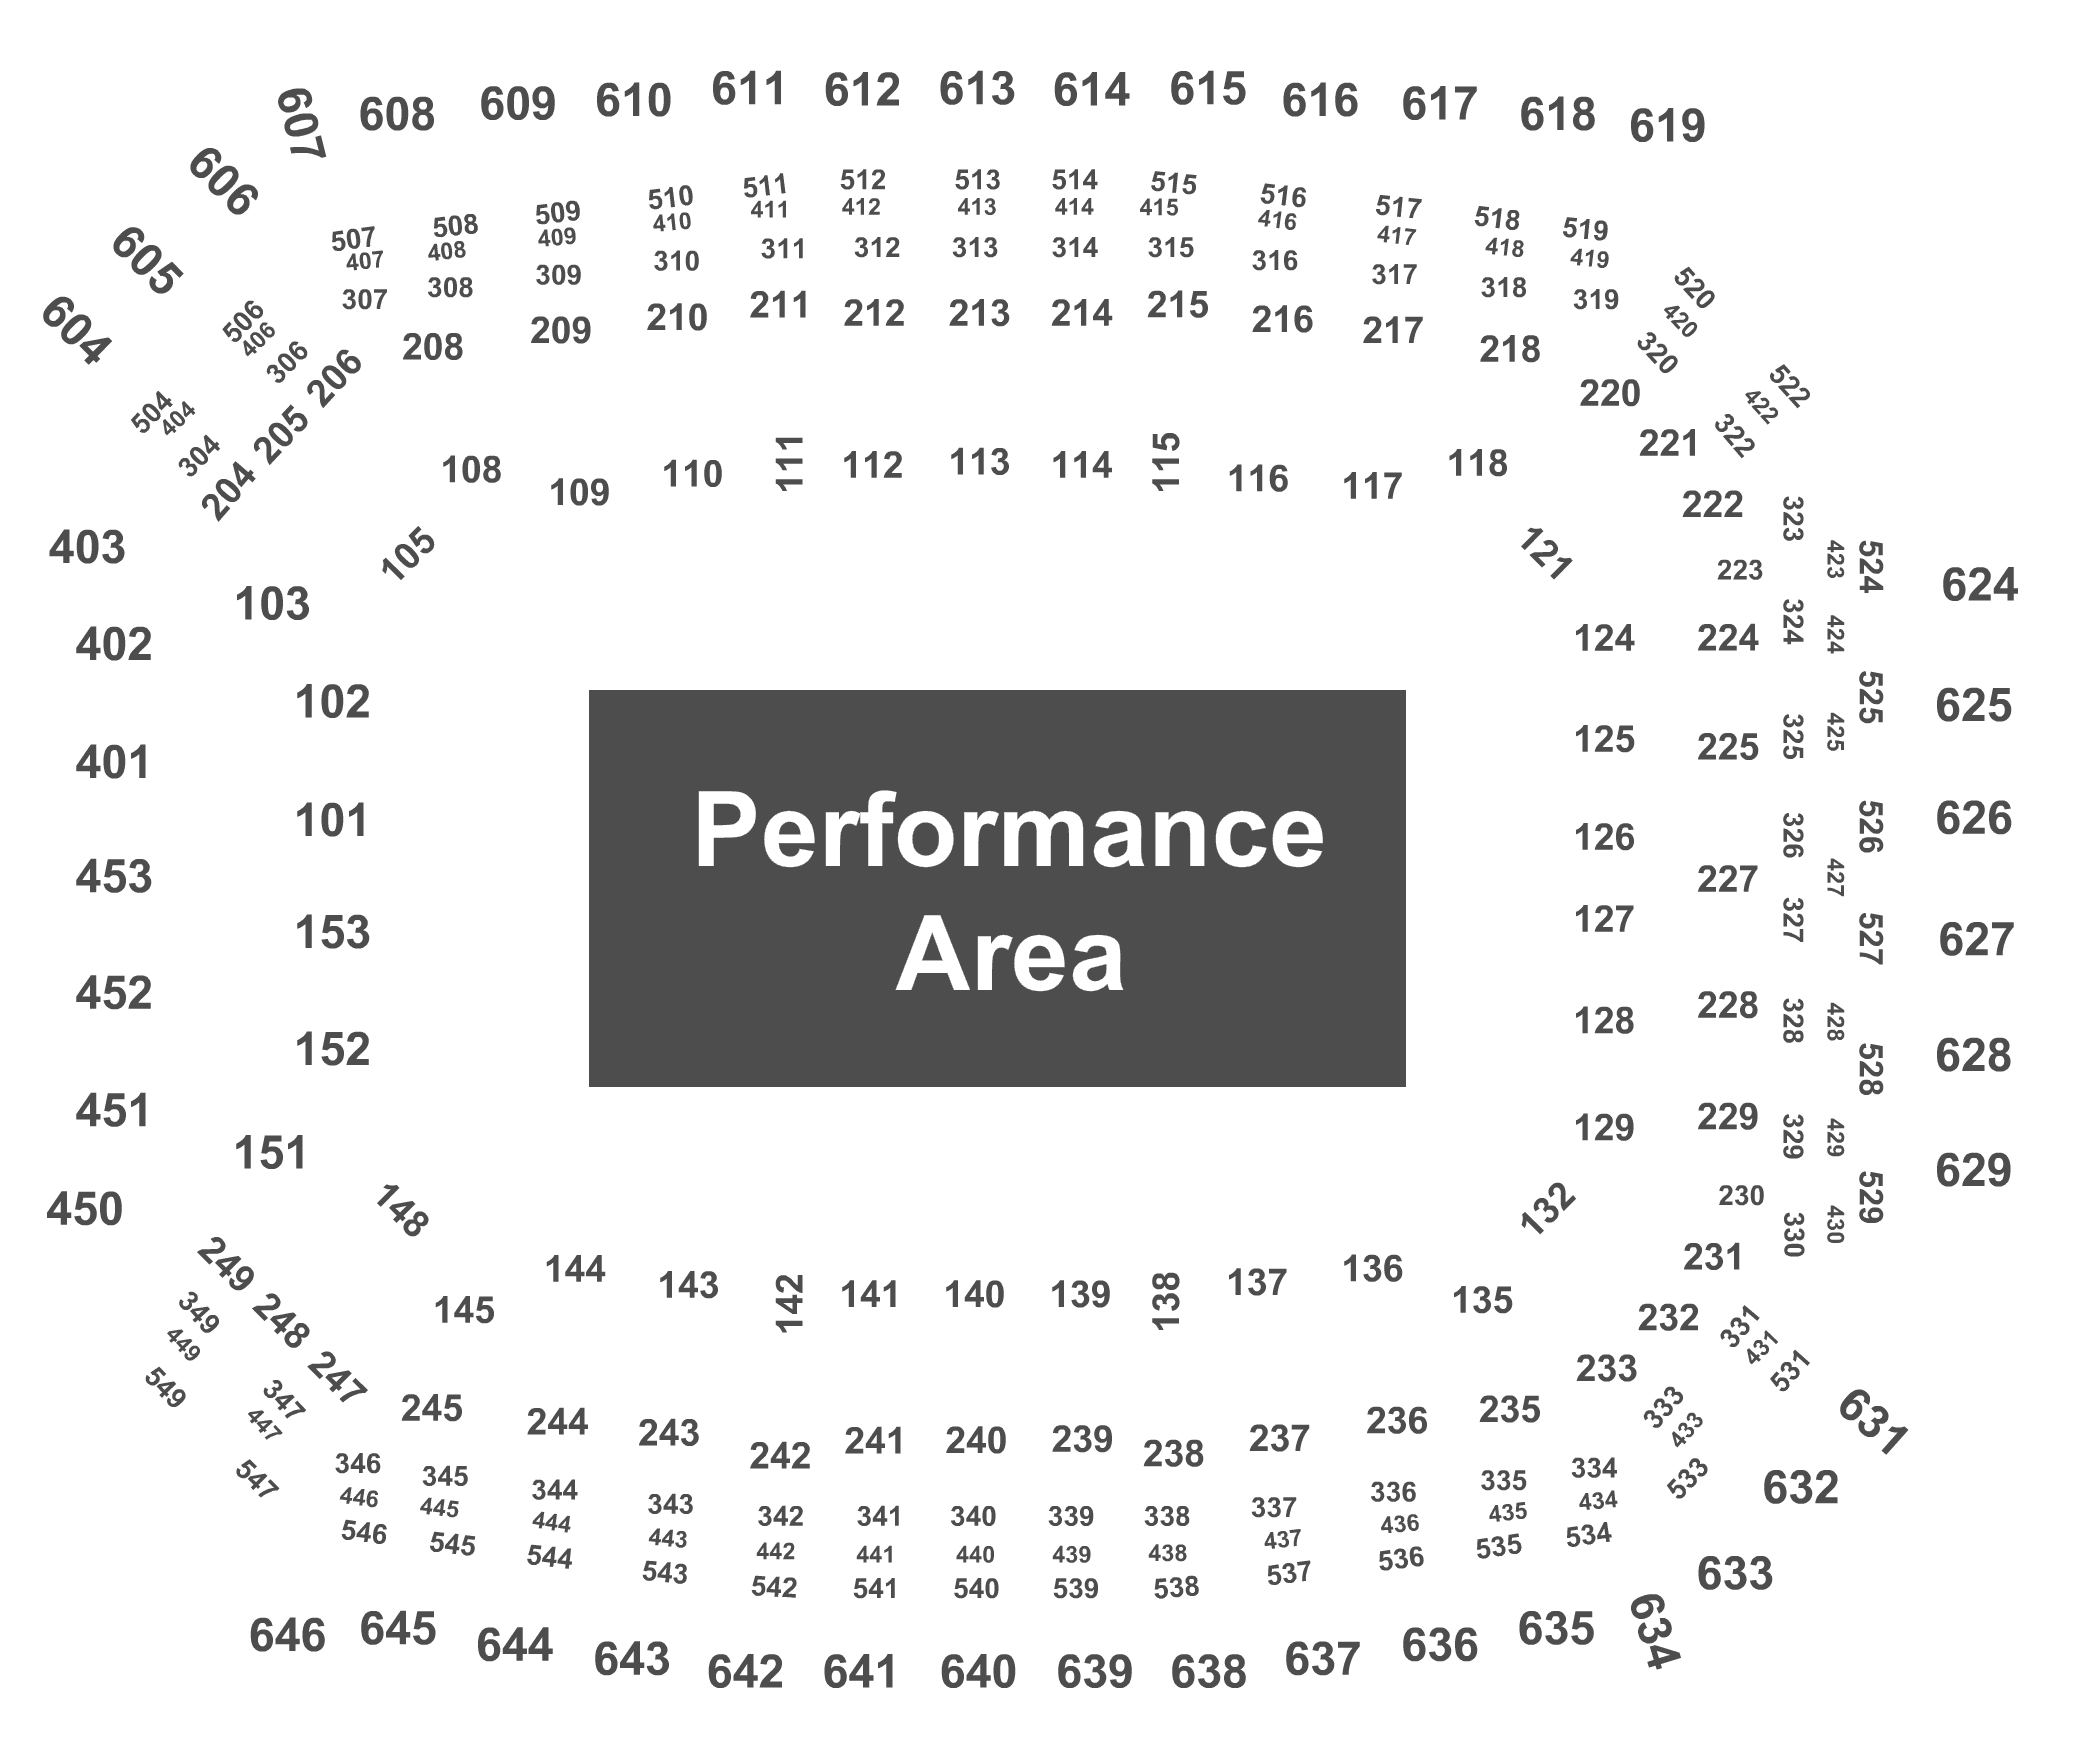 Lucas Oil Stadium Kenny Chesney Concert Seating Chart